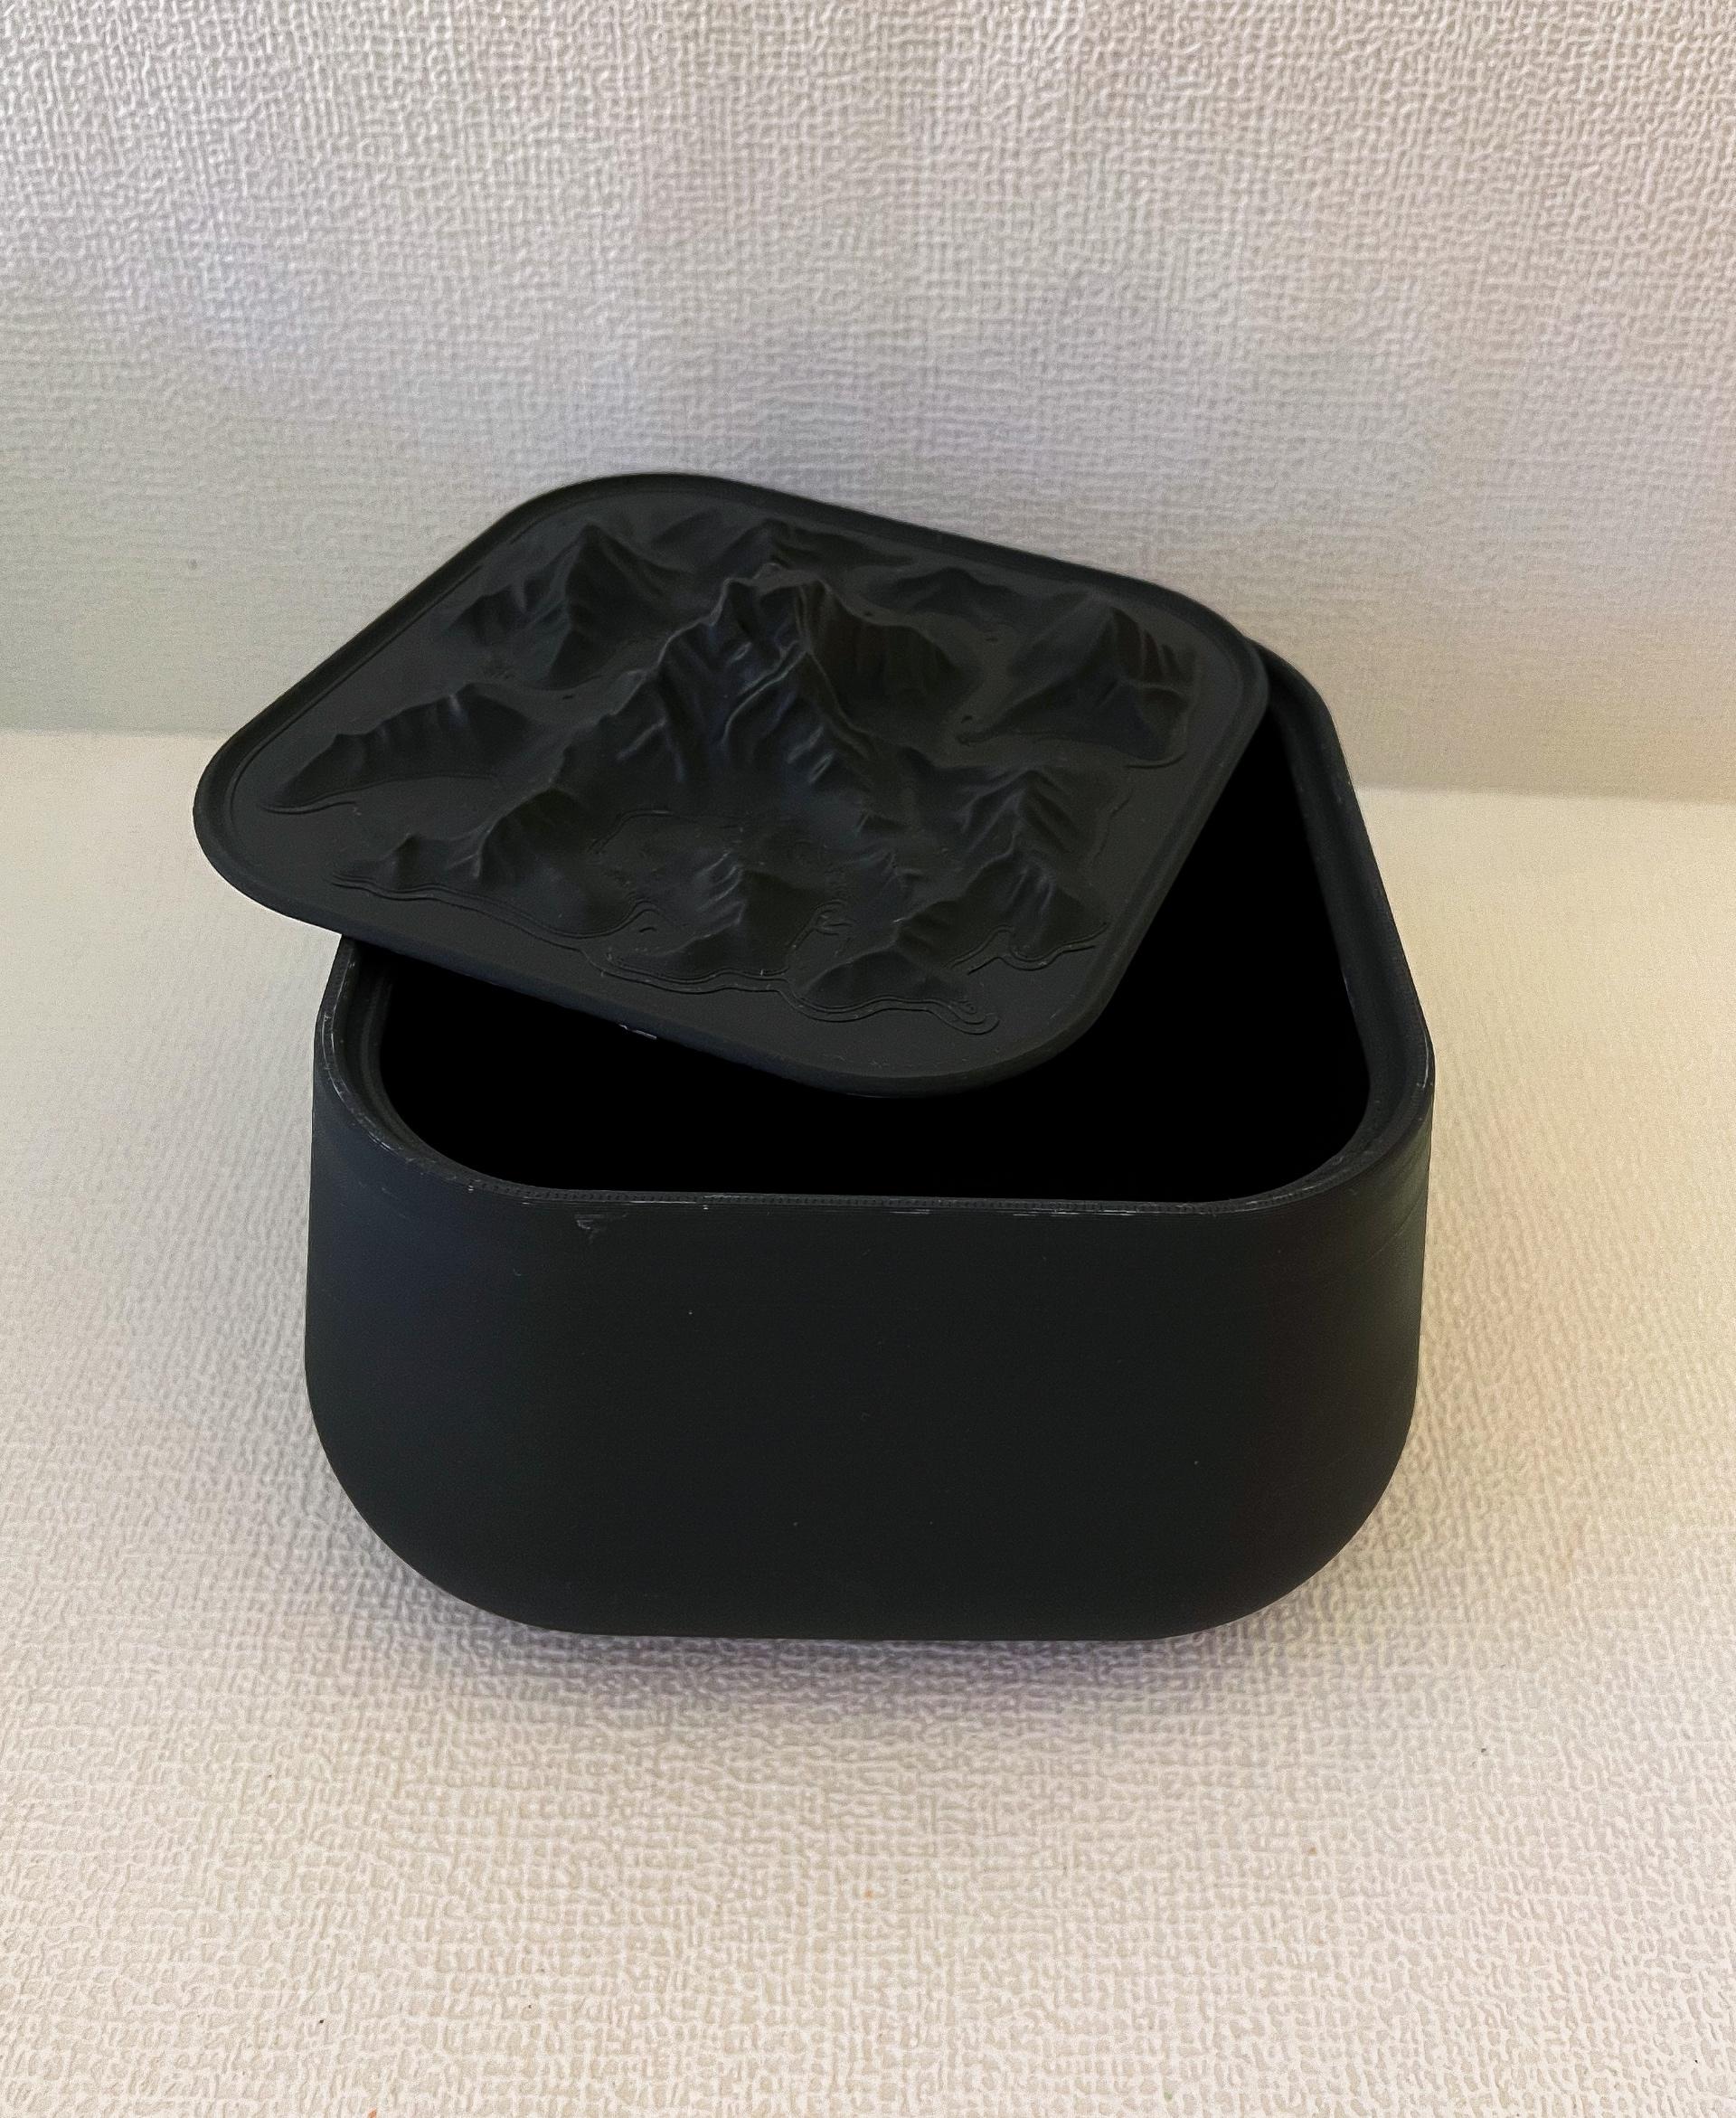 Box / Organic waste bin “Montagne” - Beautiful box.
Extrudr filament - 3d model